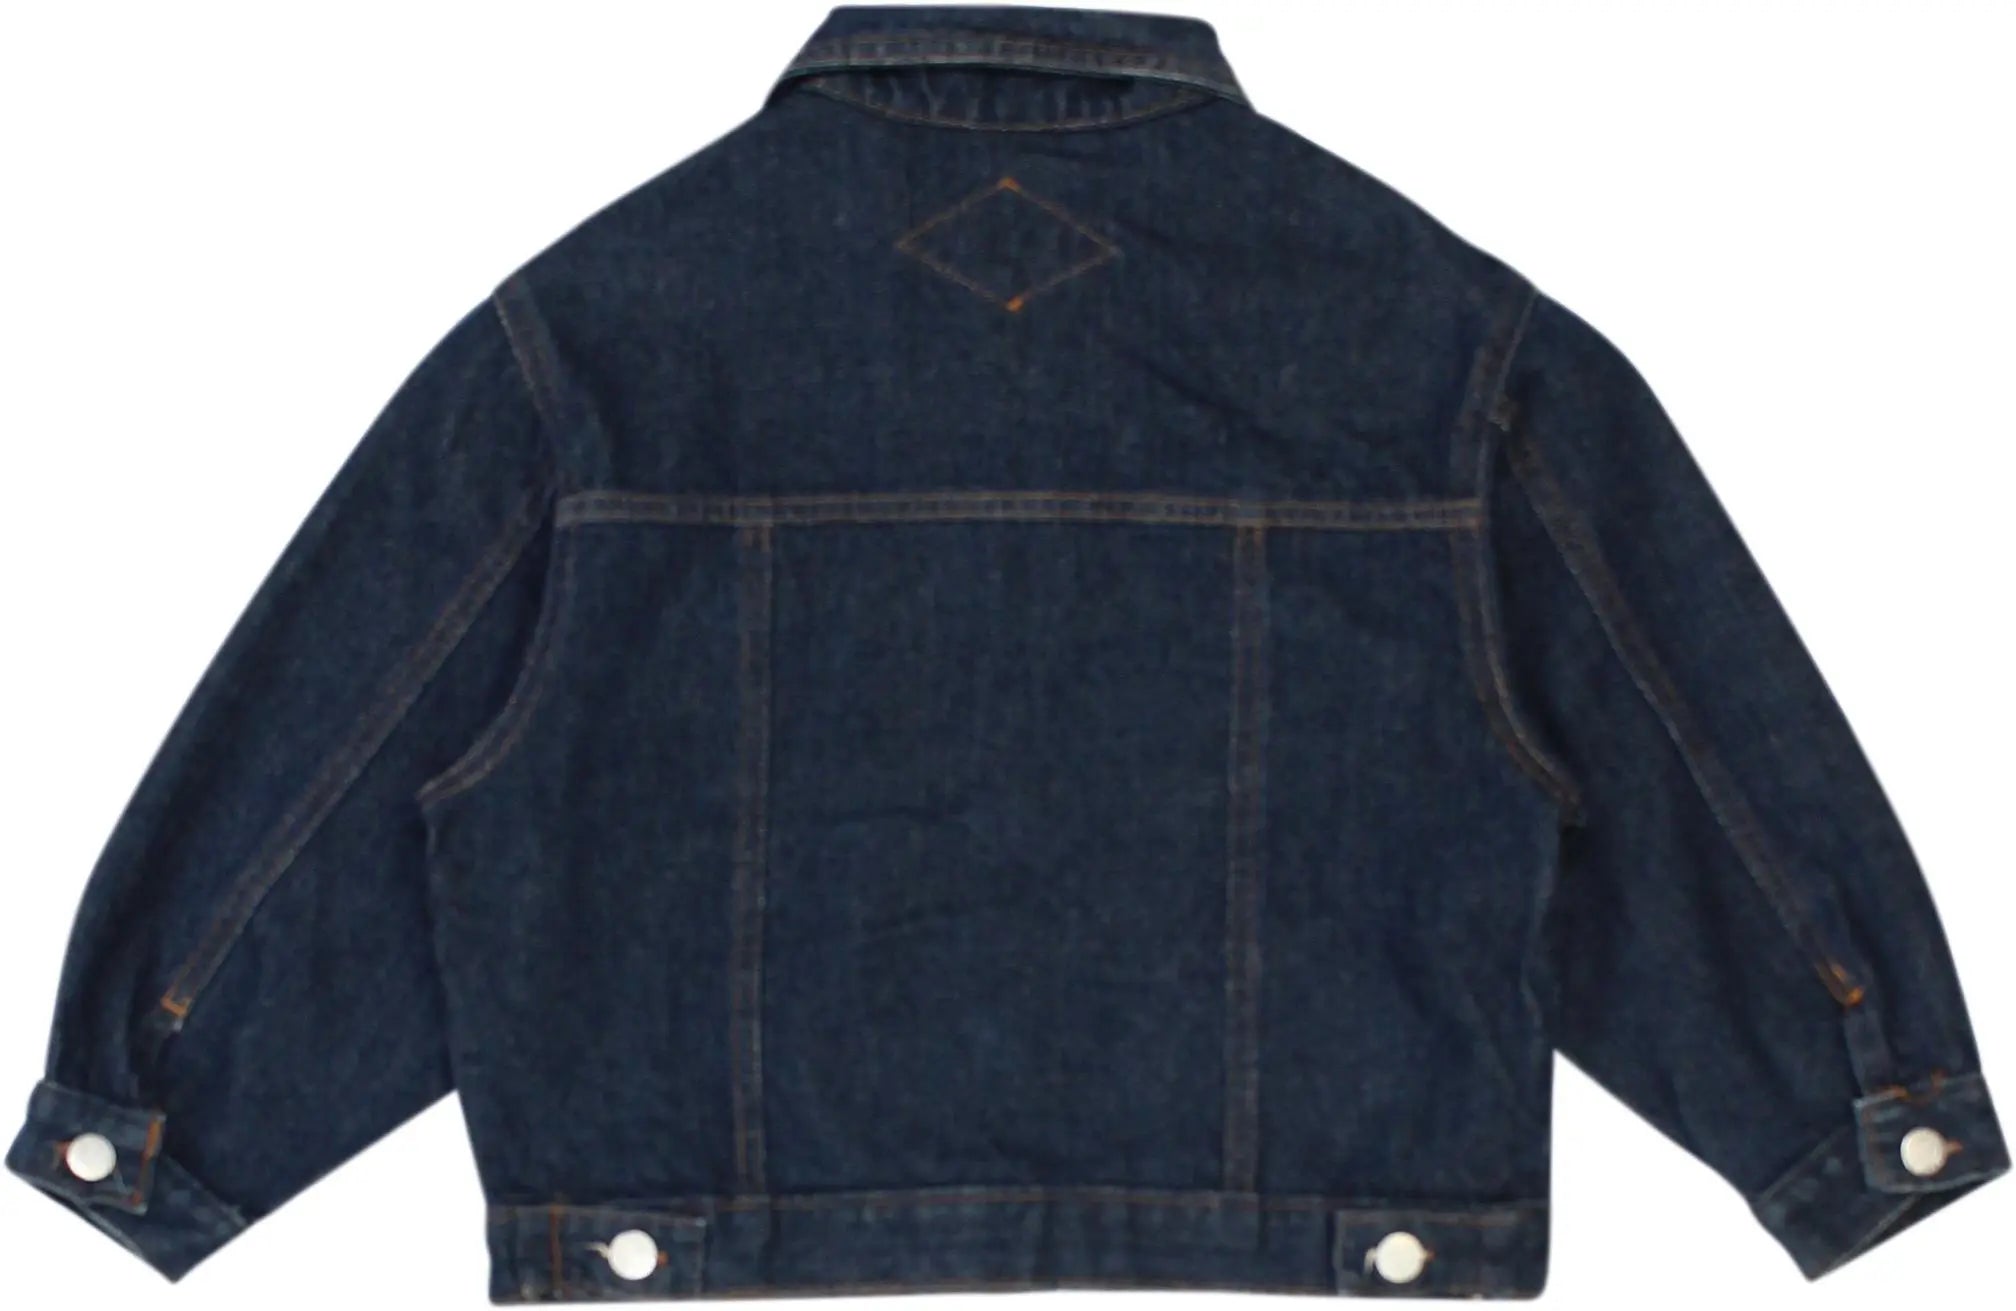 Hockey - Blue Denim Jacket- ThriftTale.com - Vintage and second handclothing